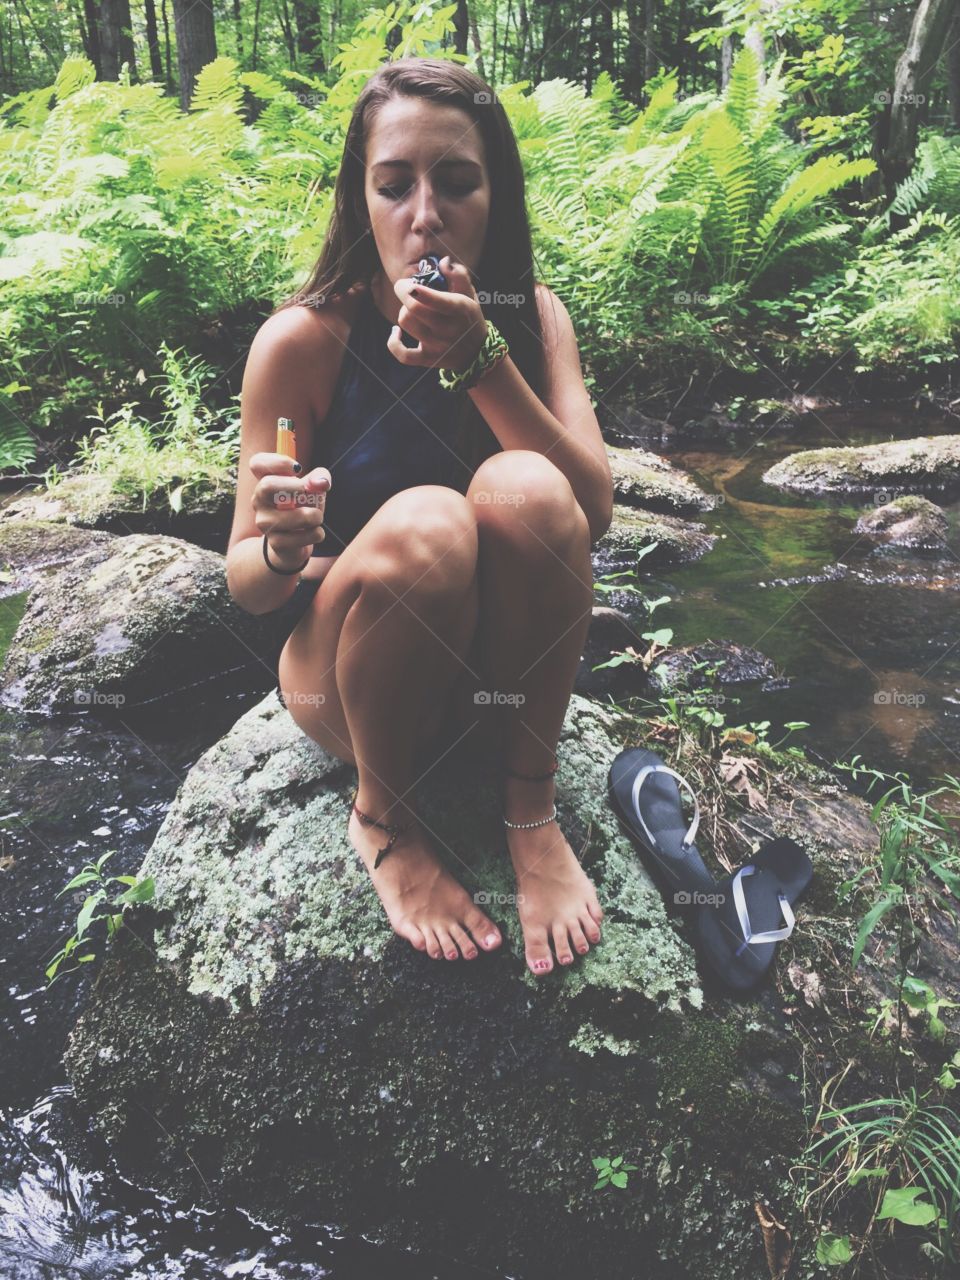 Smoking on some rocks